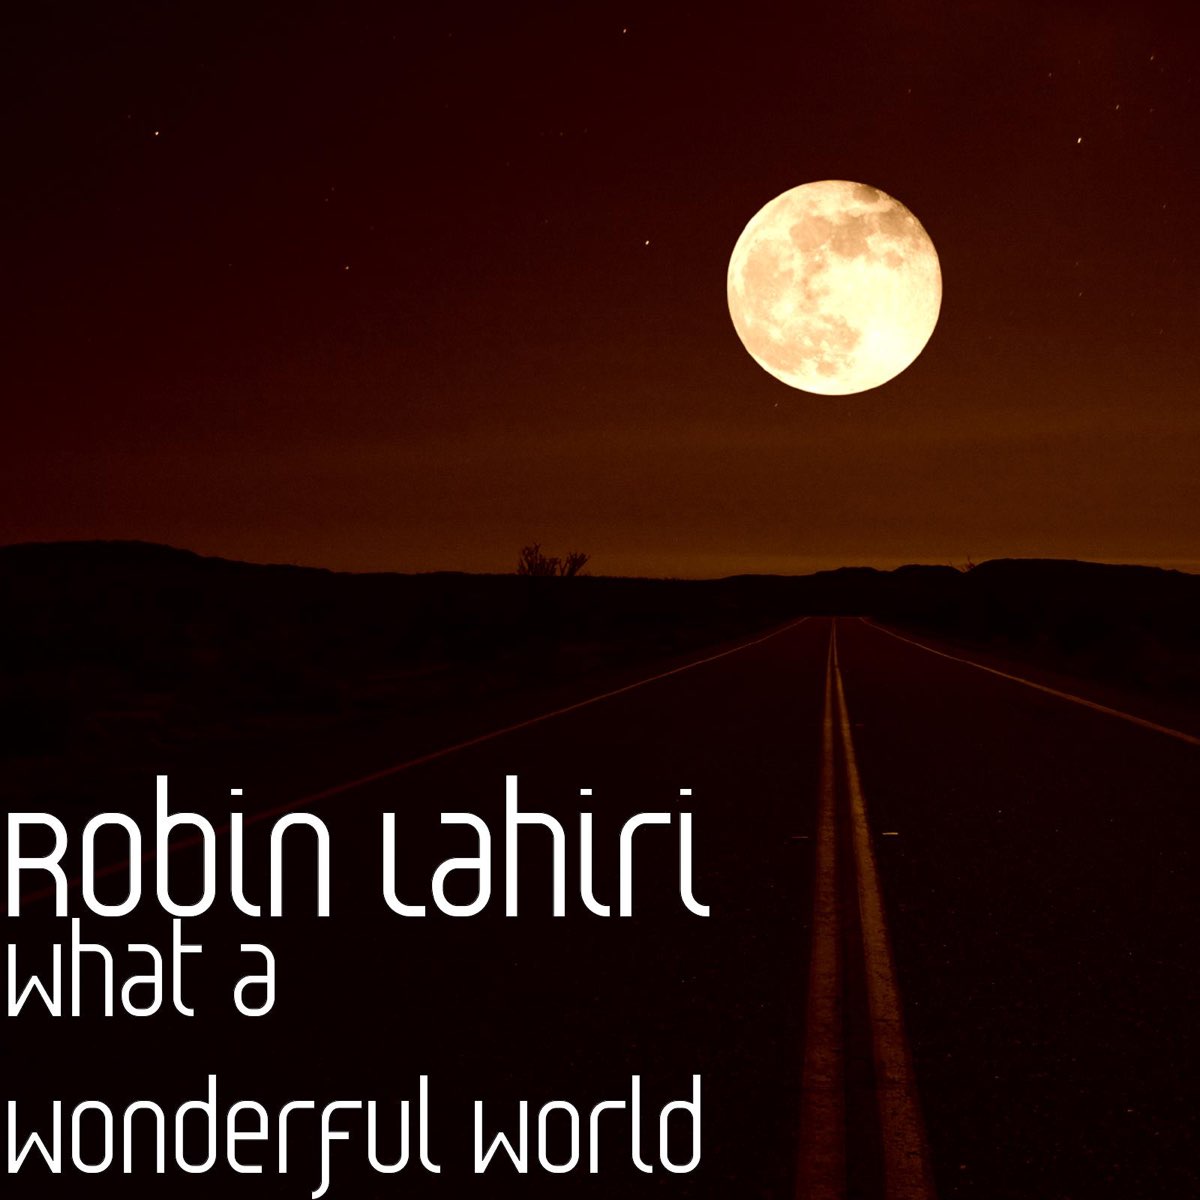 Wonderful World. Welcome to my world robin